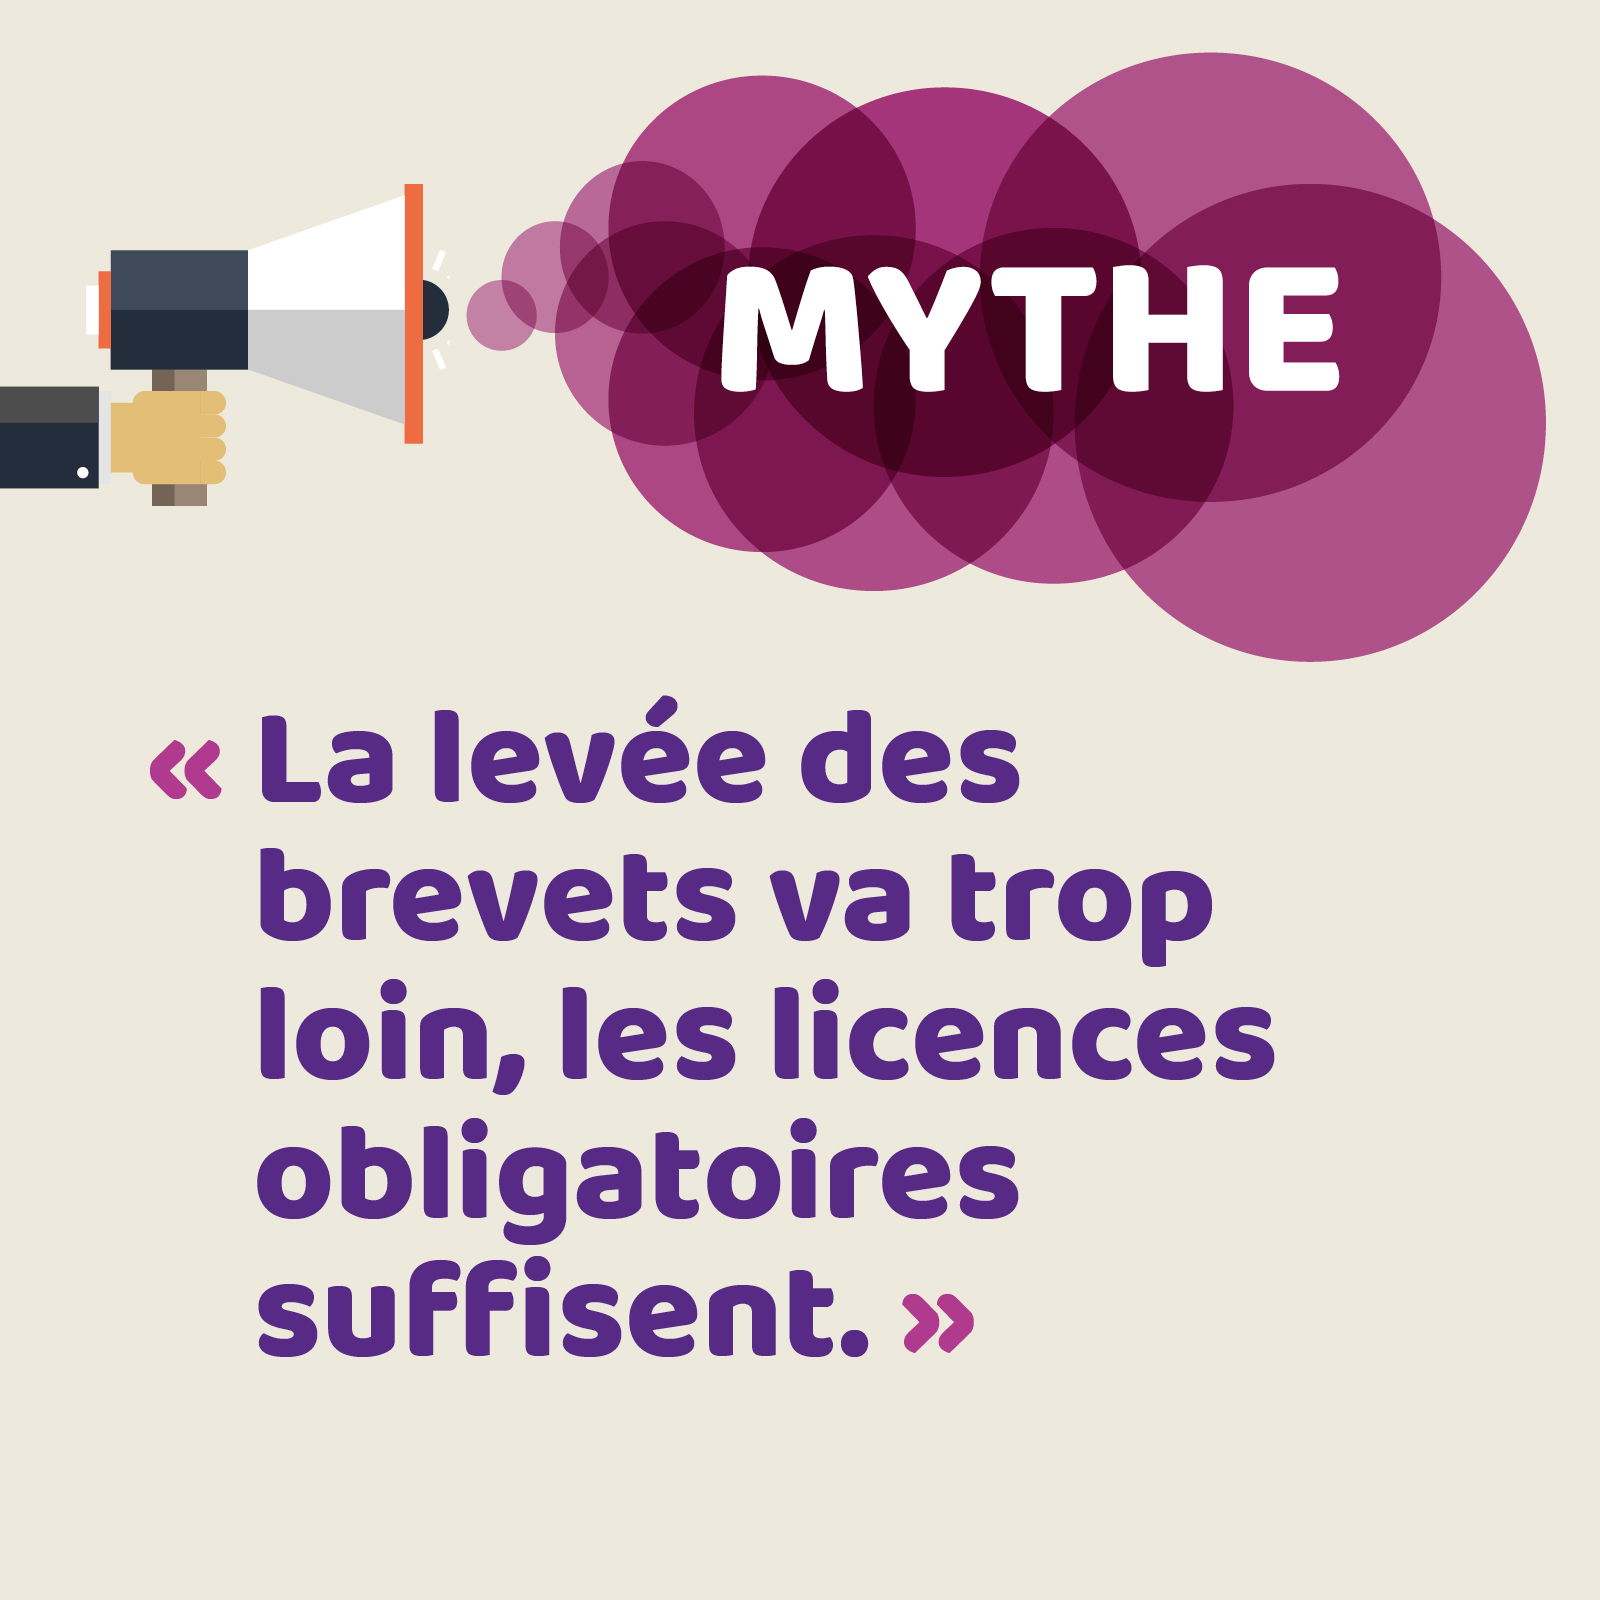 mythes visual_6_FR_mythe3-licencesobligatoires